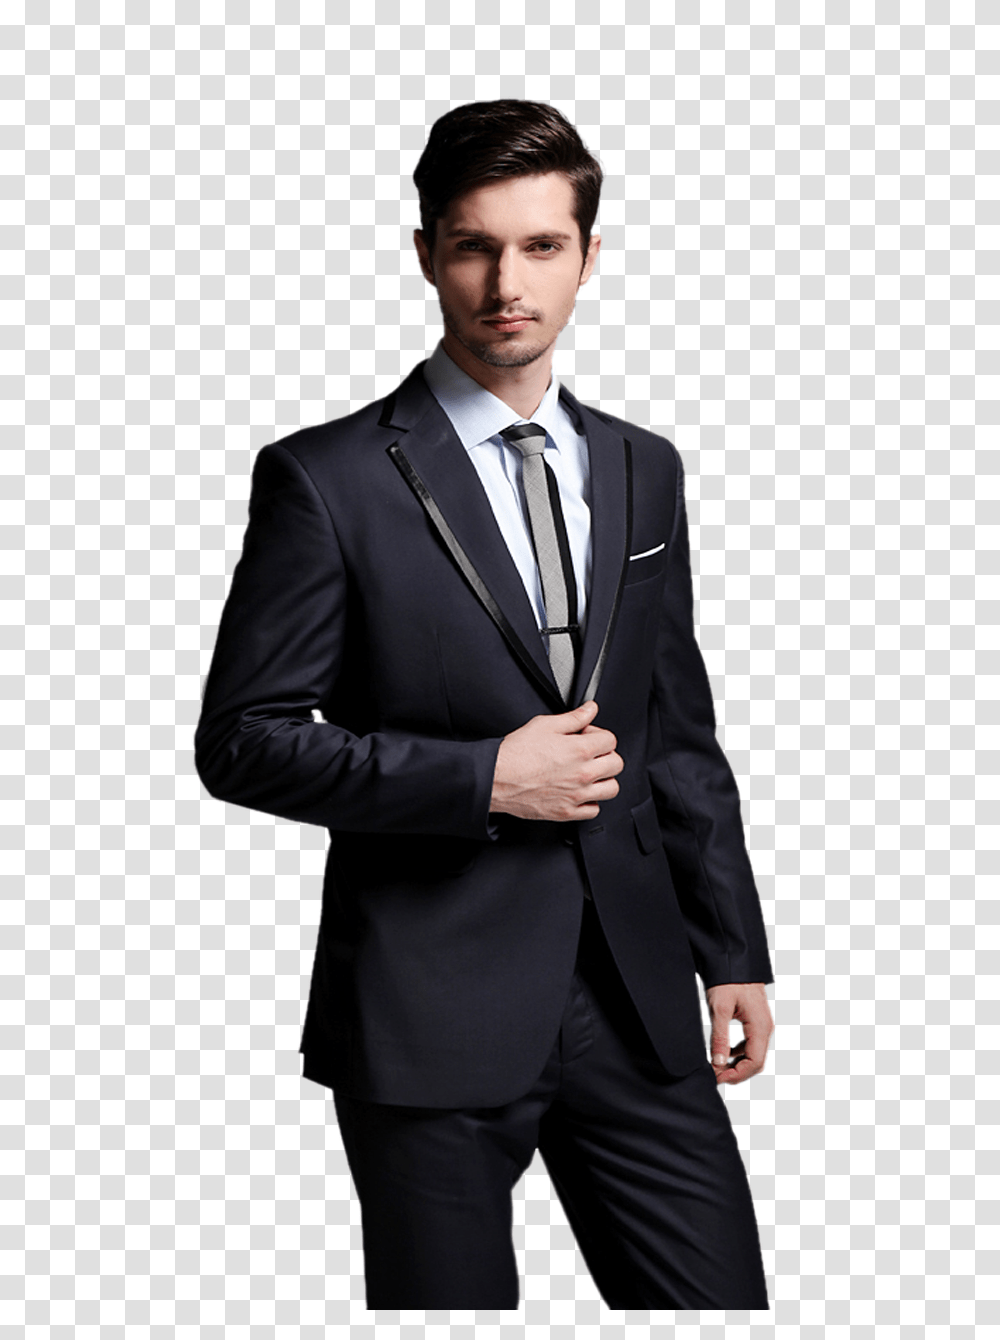 Suit, Overcoat, Apparel, Tie Transparent Png